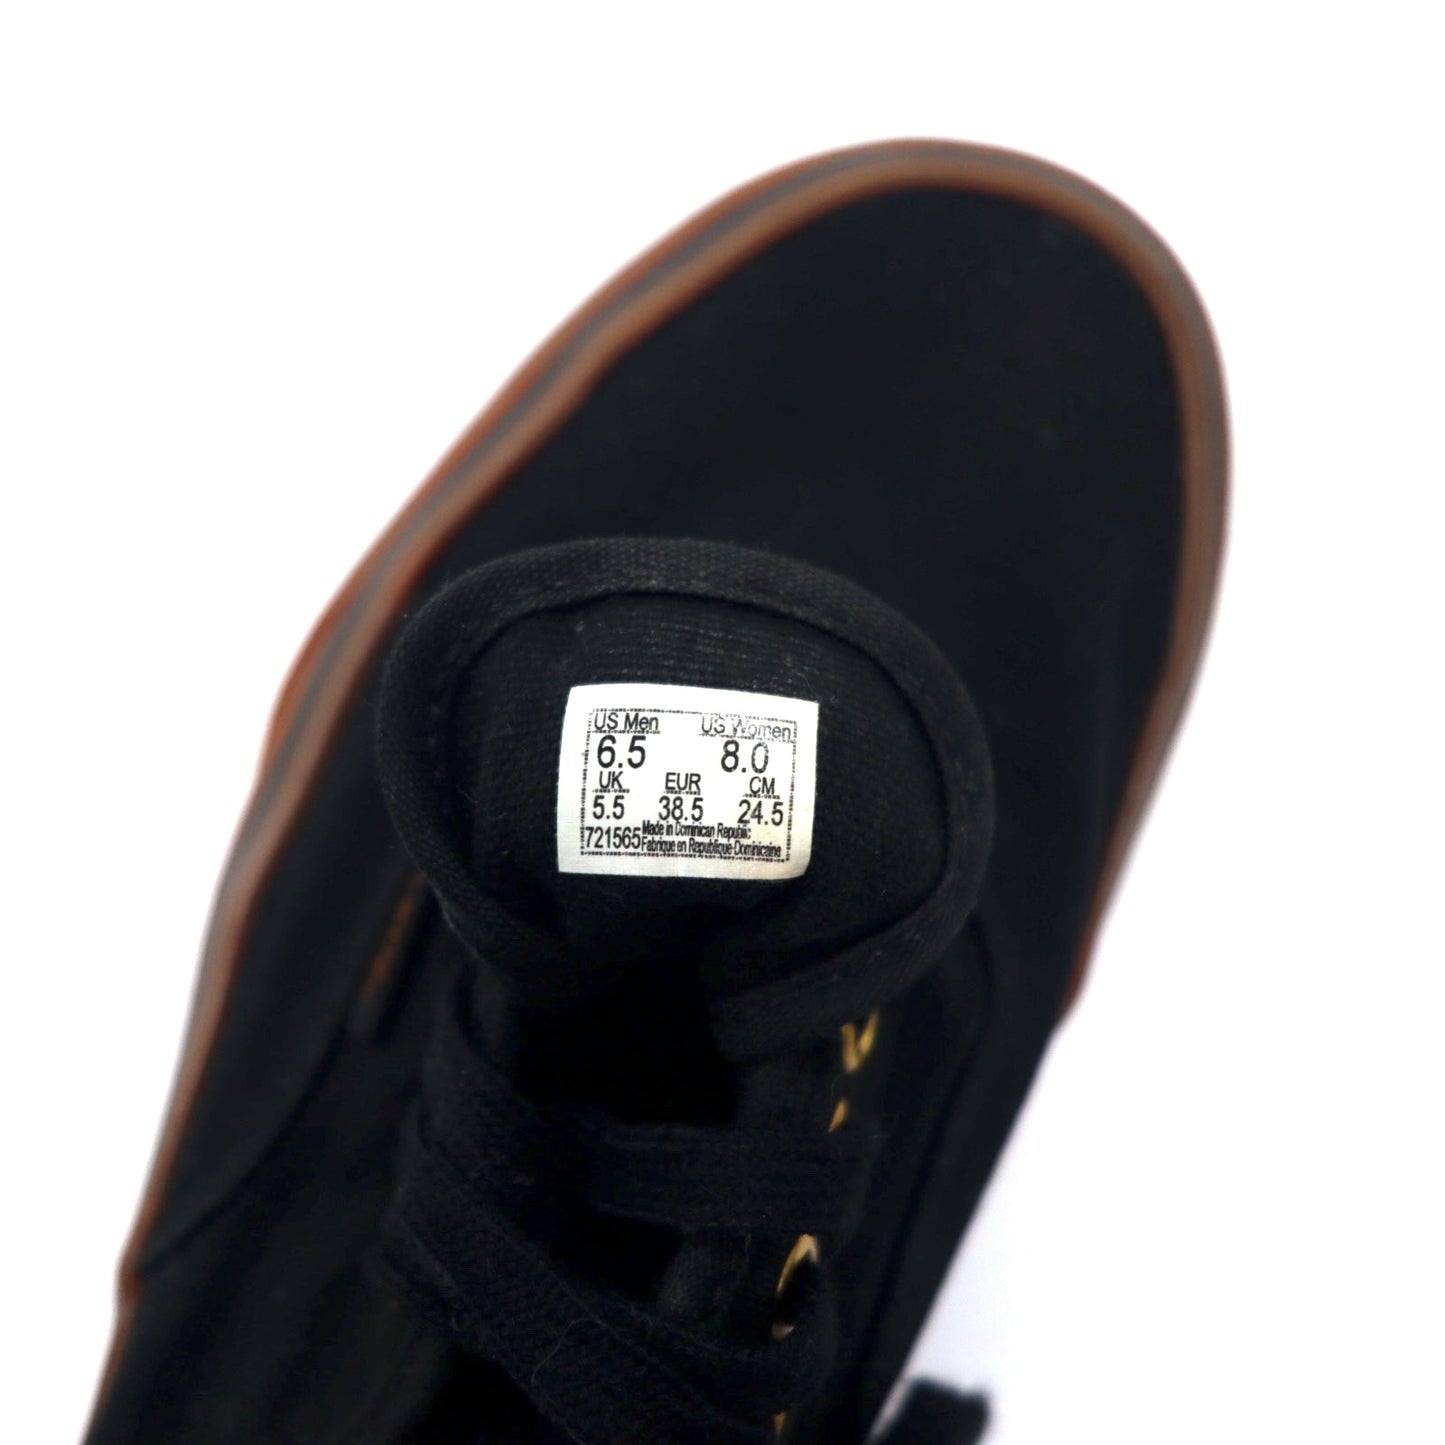 VANS オーセンティック スニーカー 24.5cm ブラック キャンバス Authentic Gum Shoe 721565